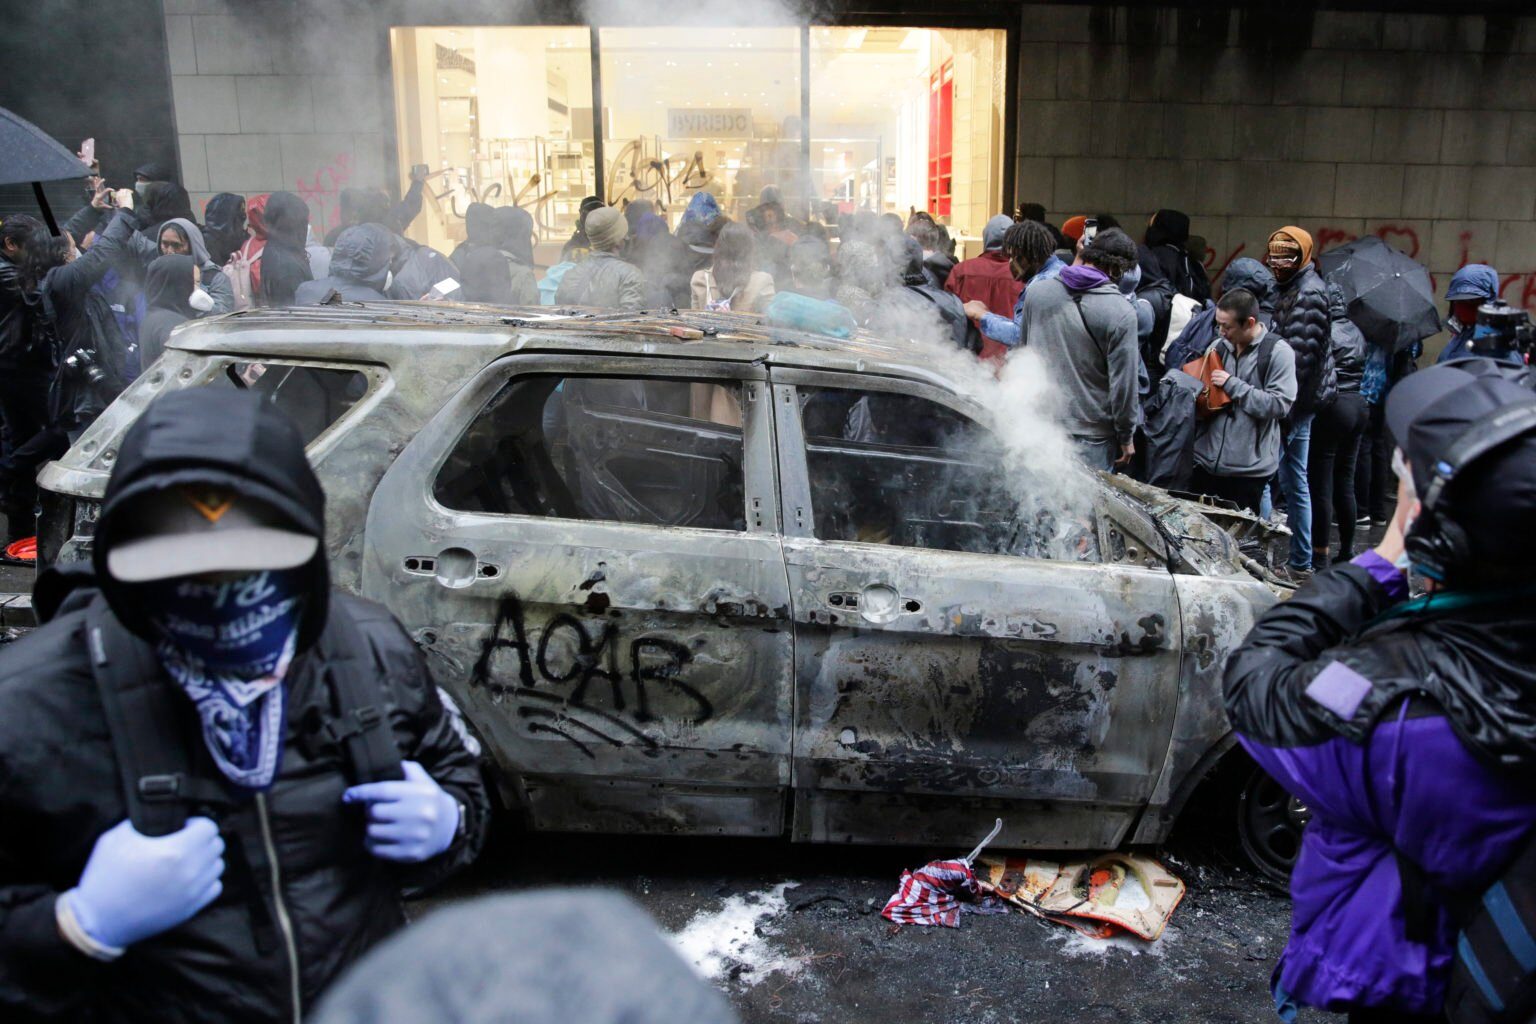 blm riots antifa seattle